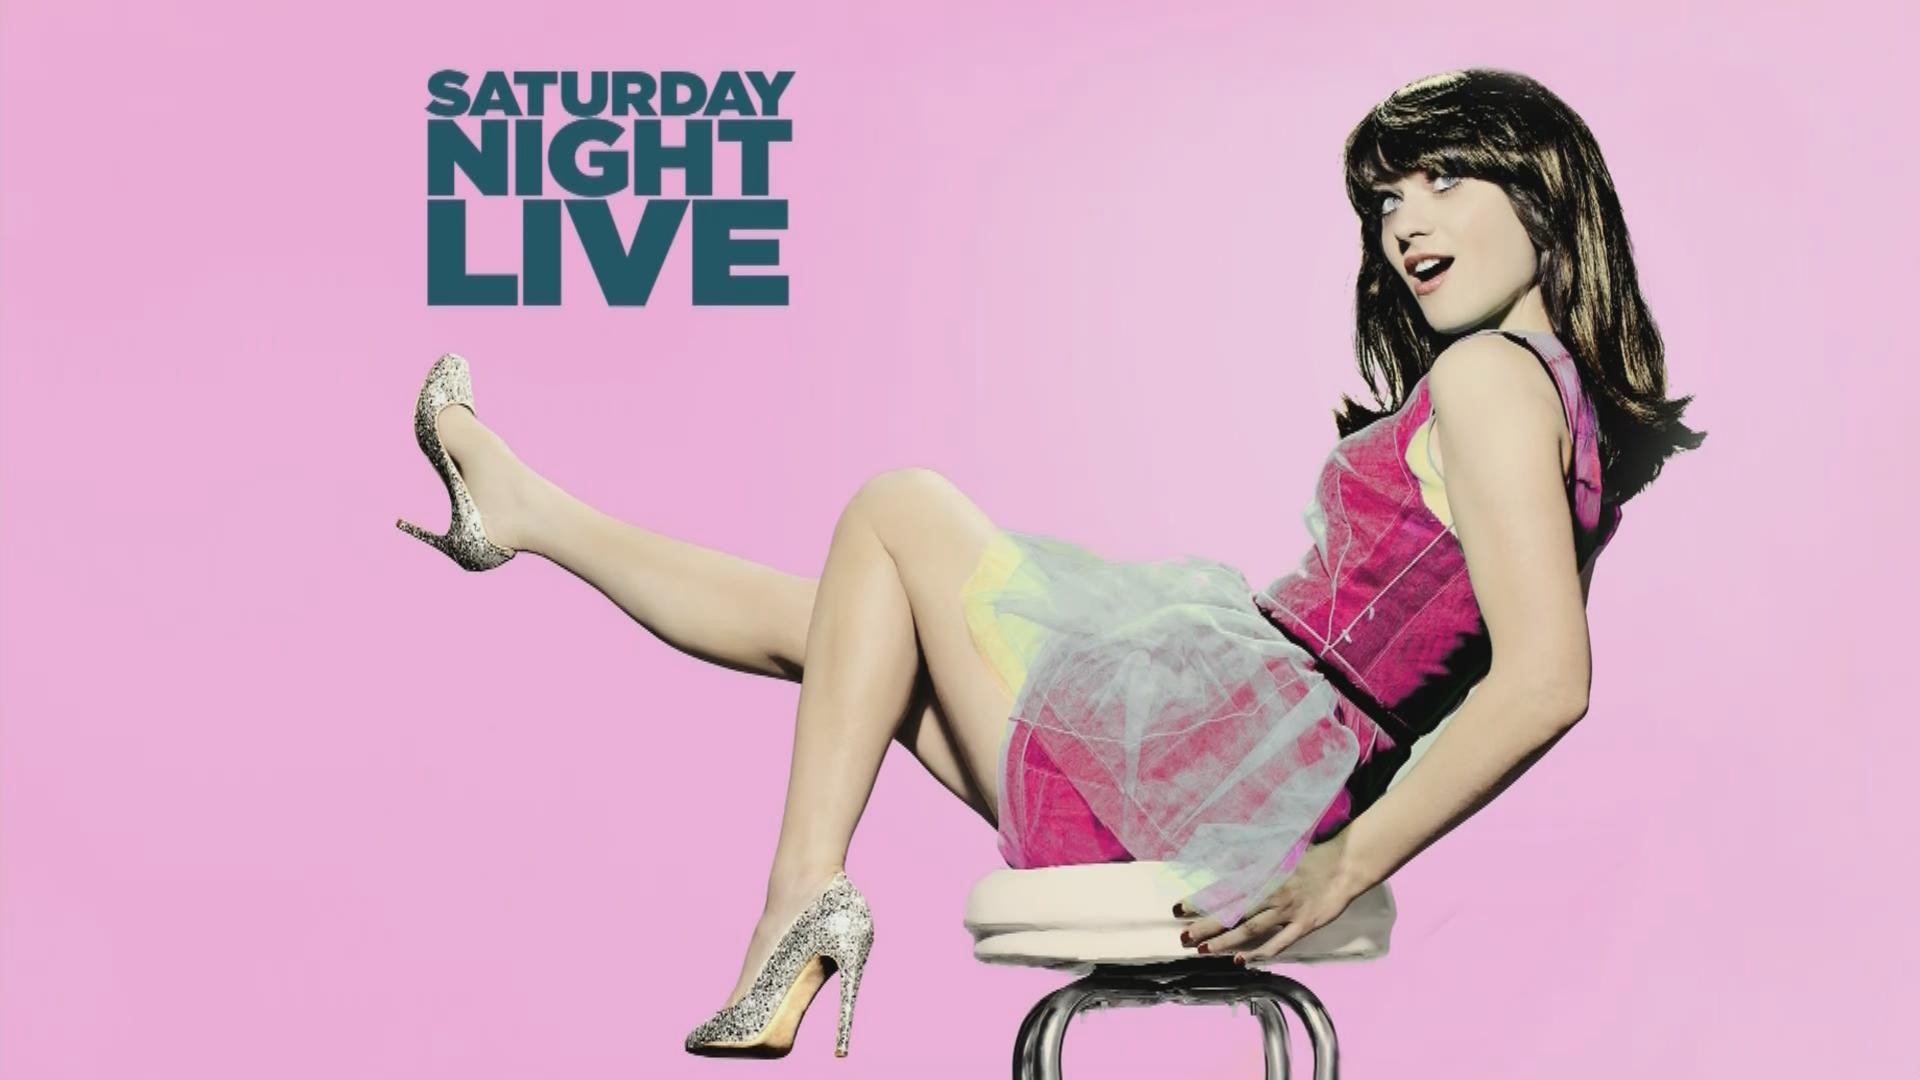 брюнетки, девушки, Зуи Дешанель, Saturday Night Live - обои на рабочий стол